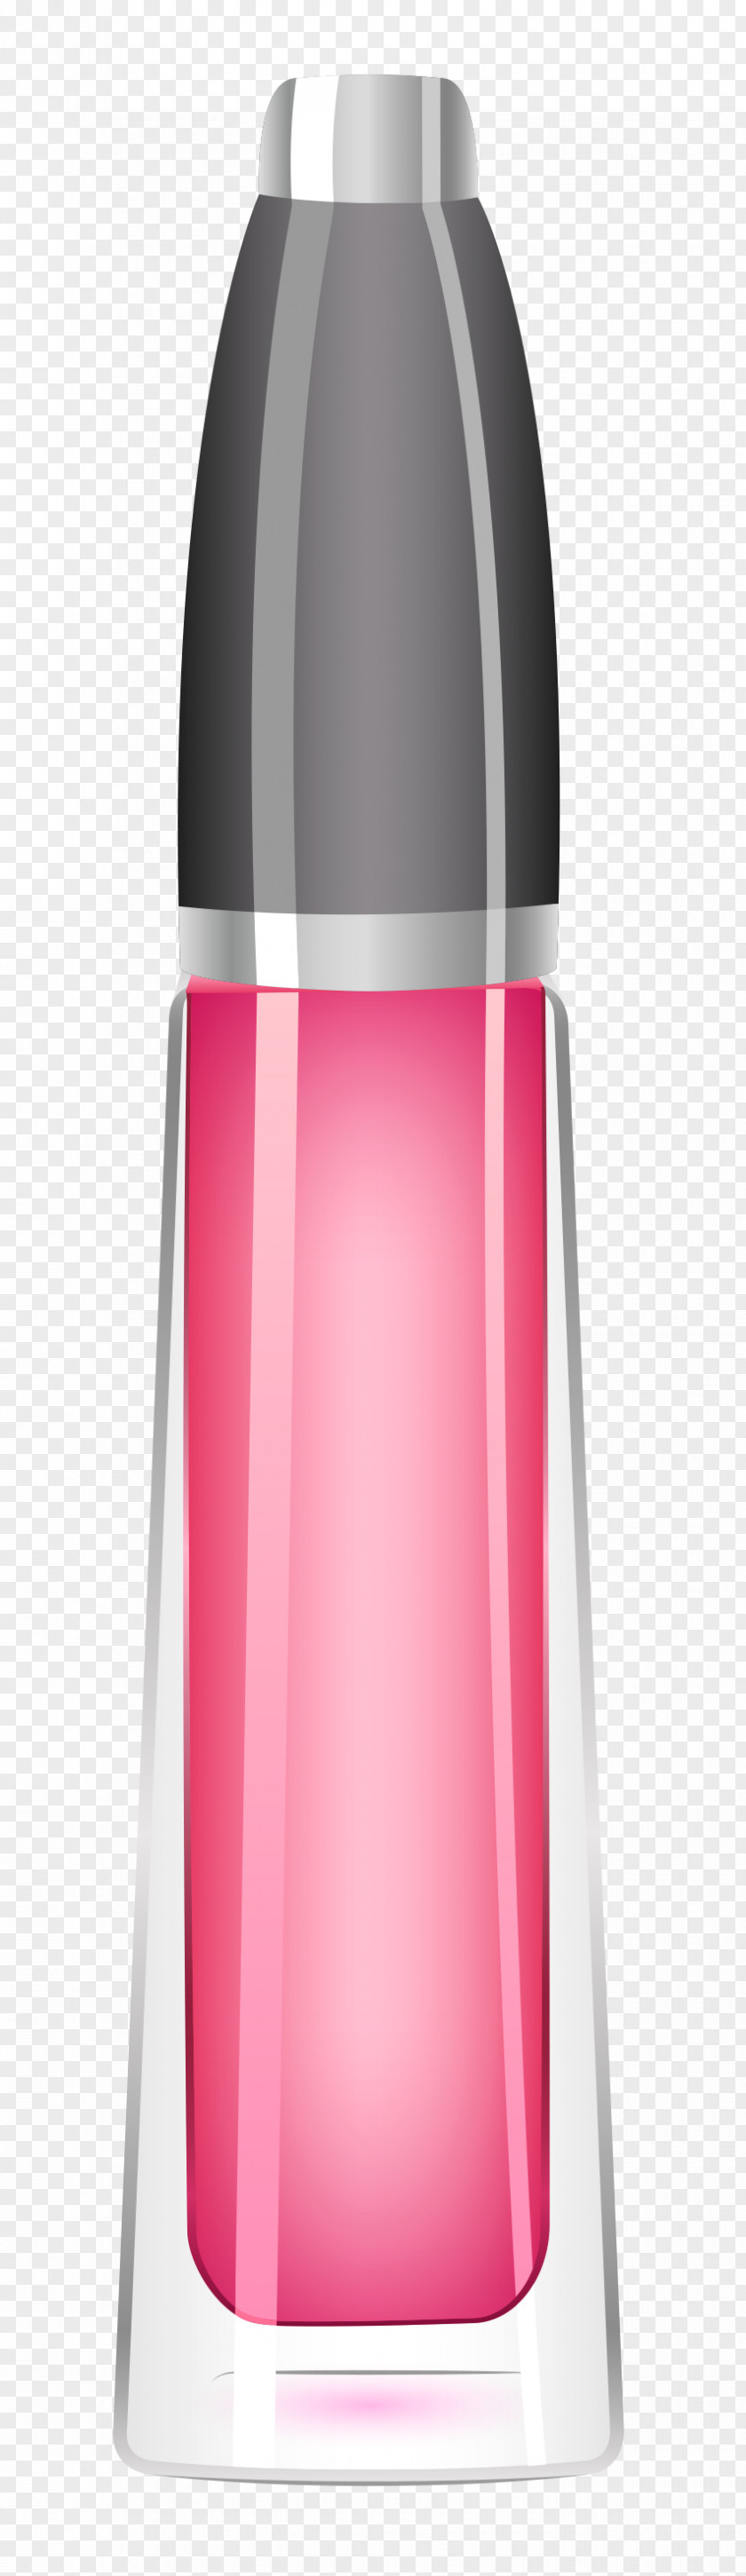 Lipstick Pink Picture Minecraft Glass Bottle Boston Round PNG